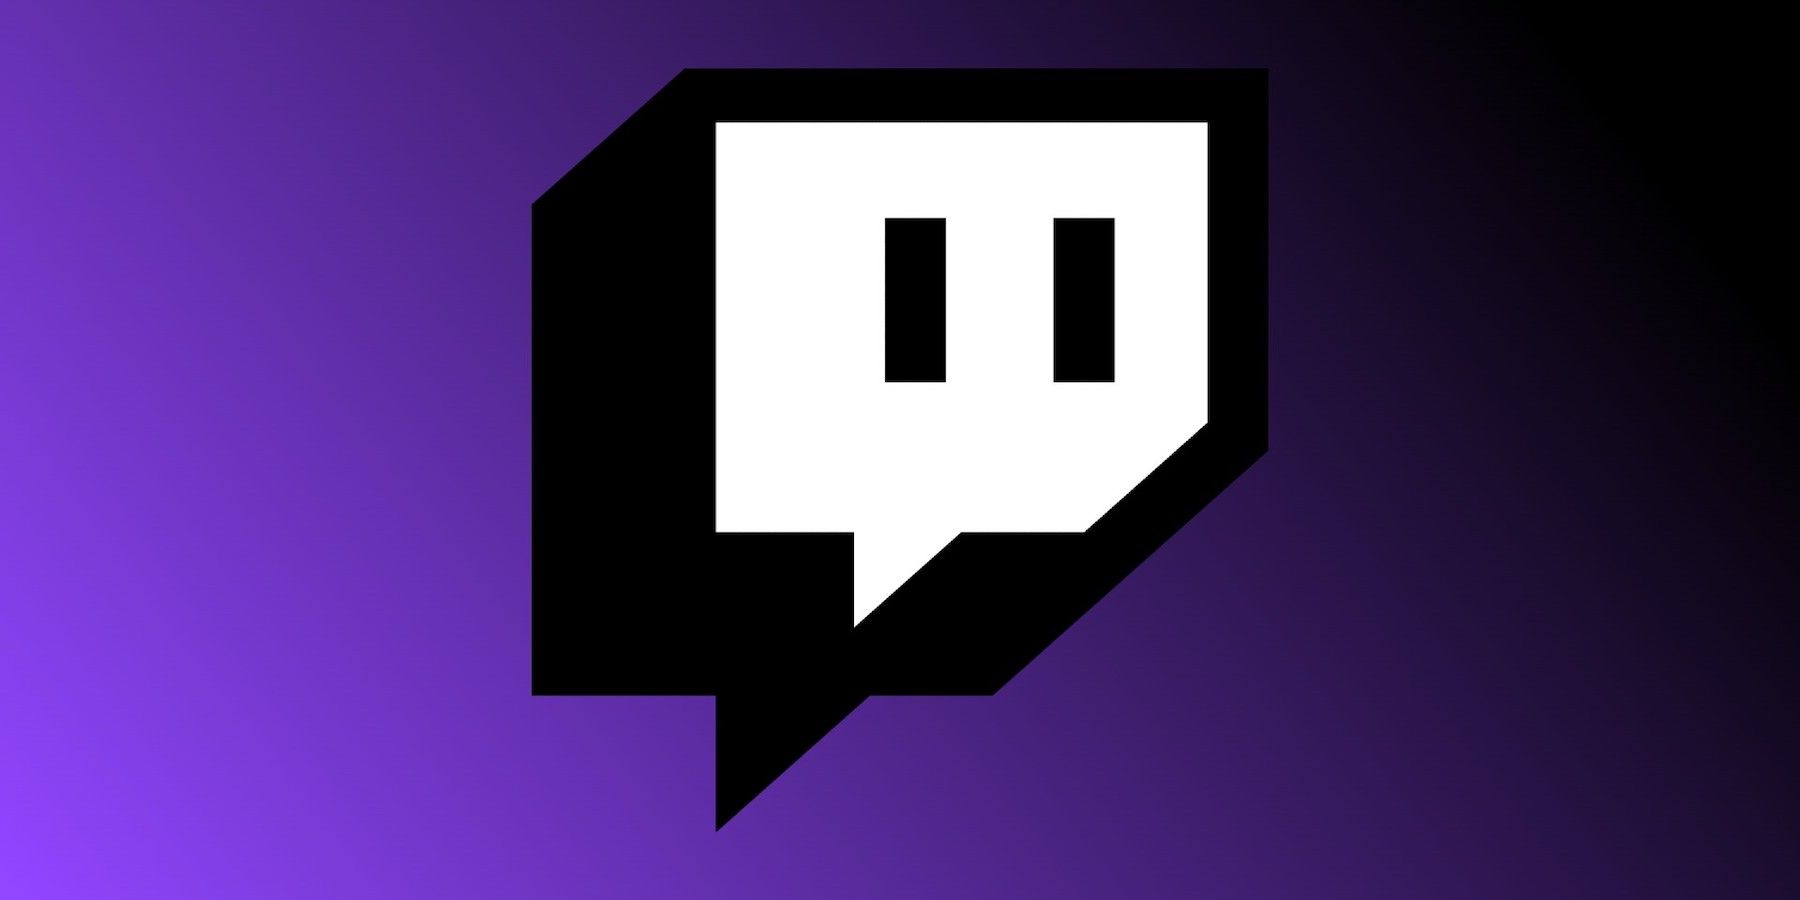 twitch-icon-purple-black-gradient